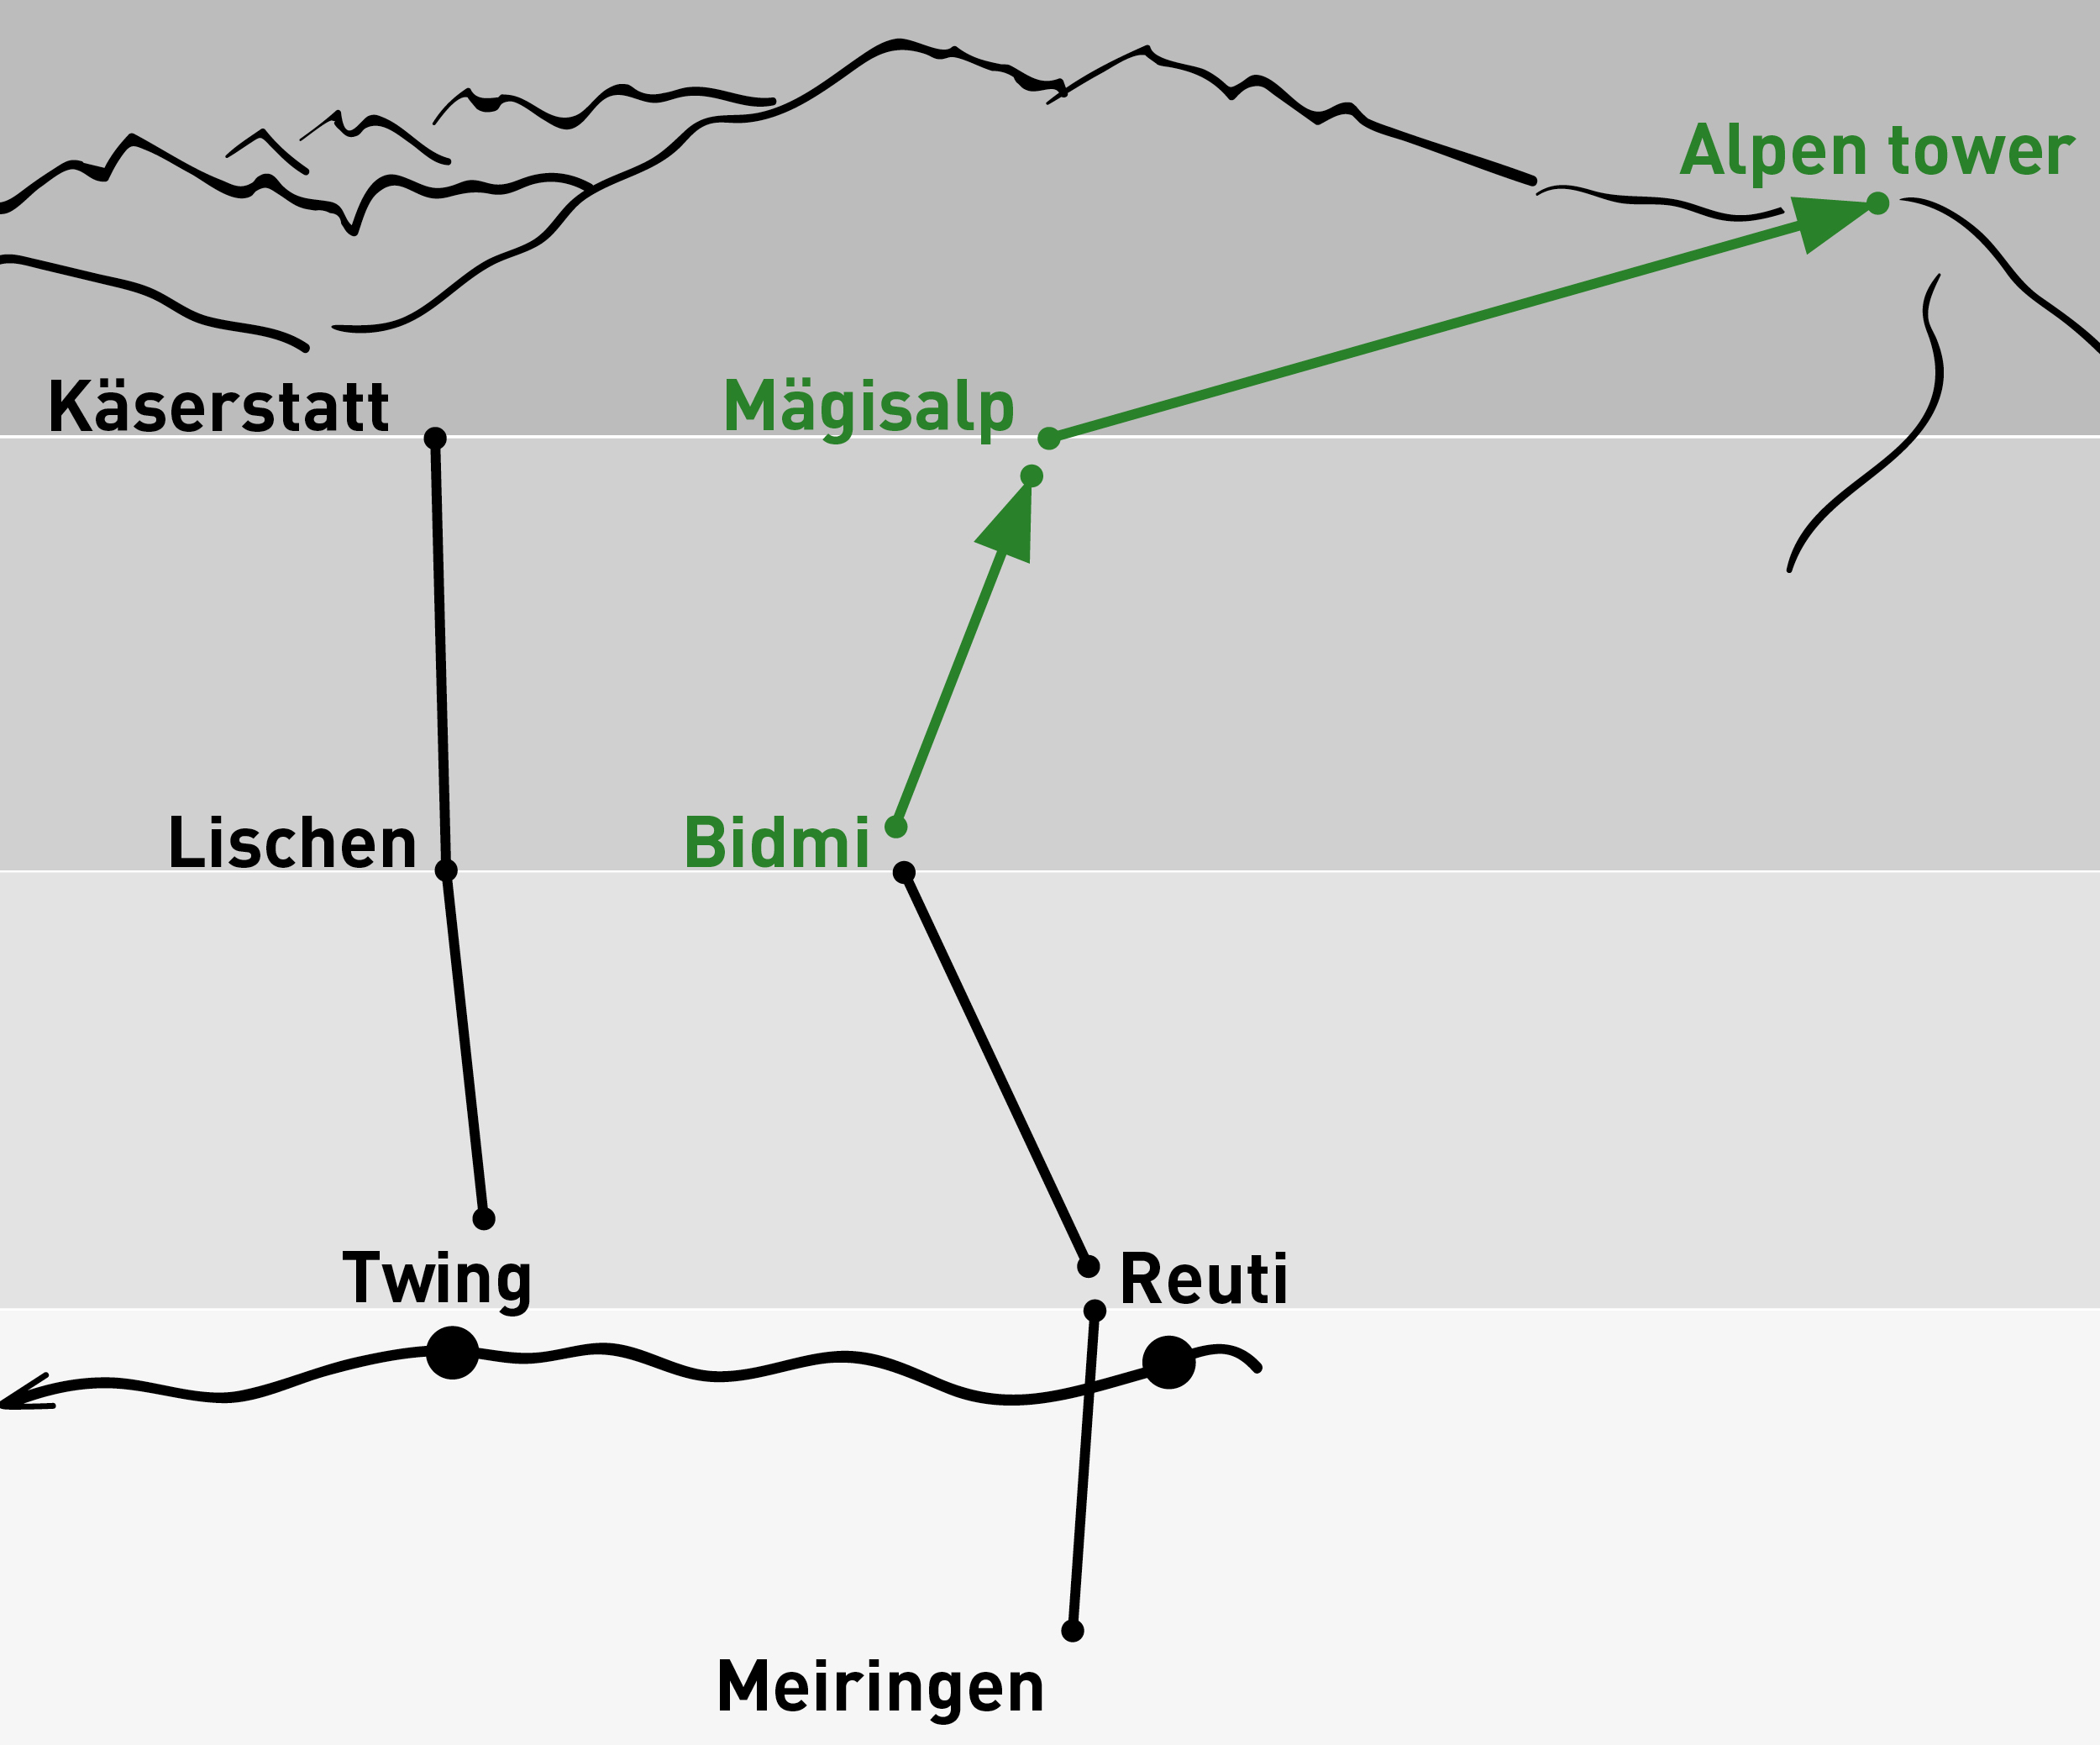  Bidmi - Alpen tower | Aller simple